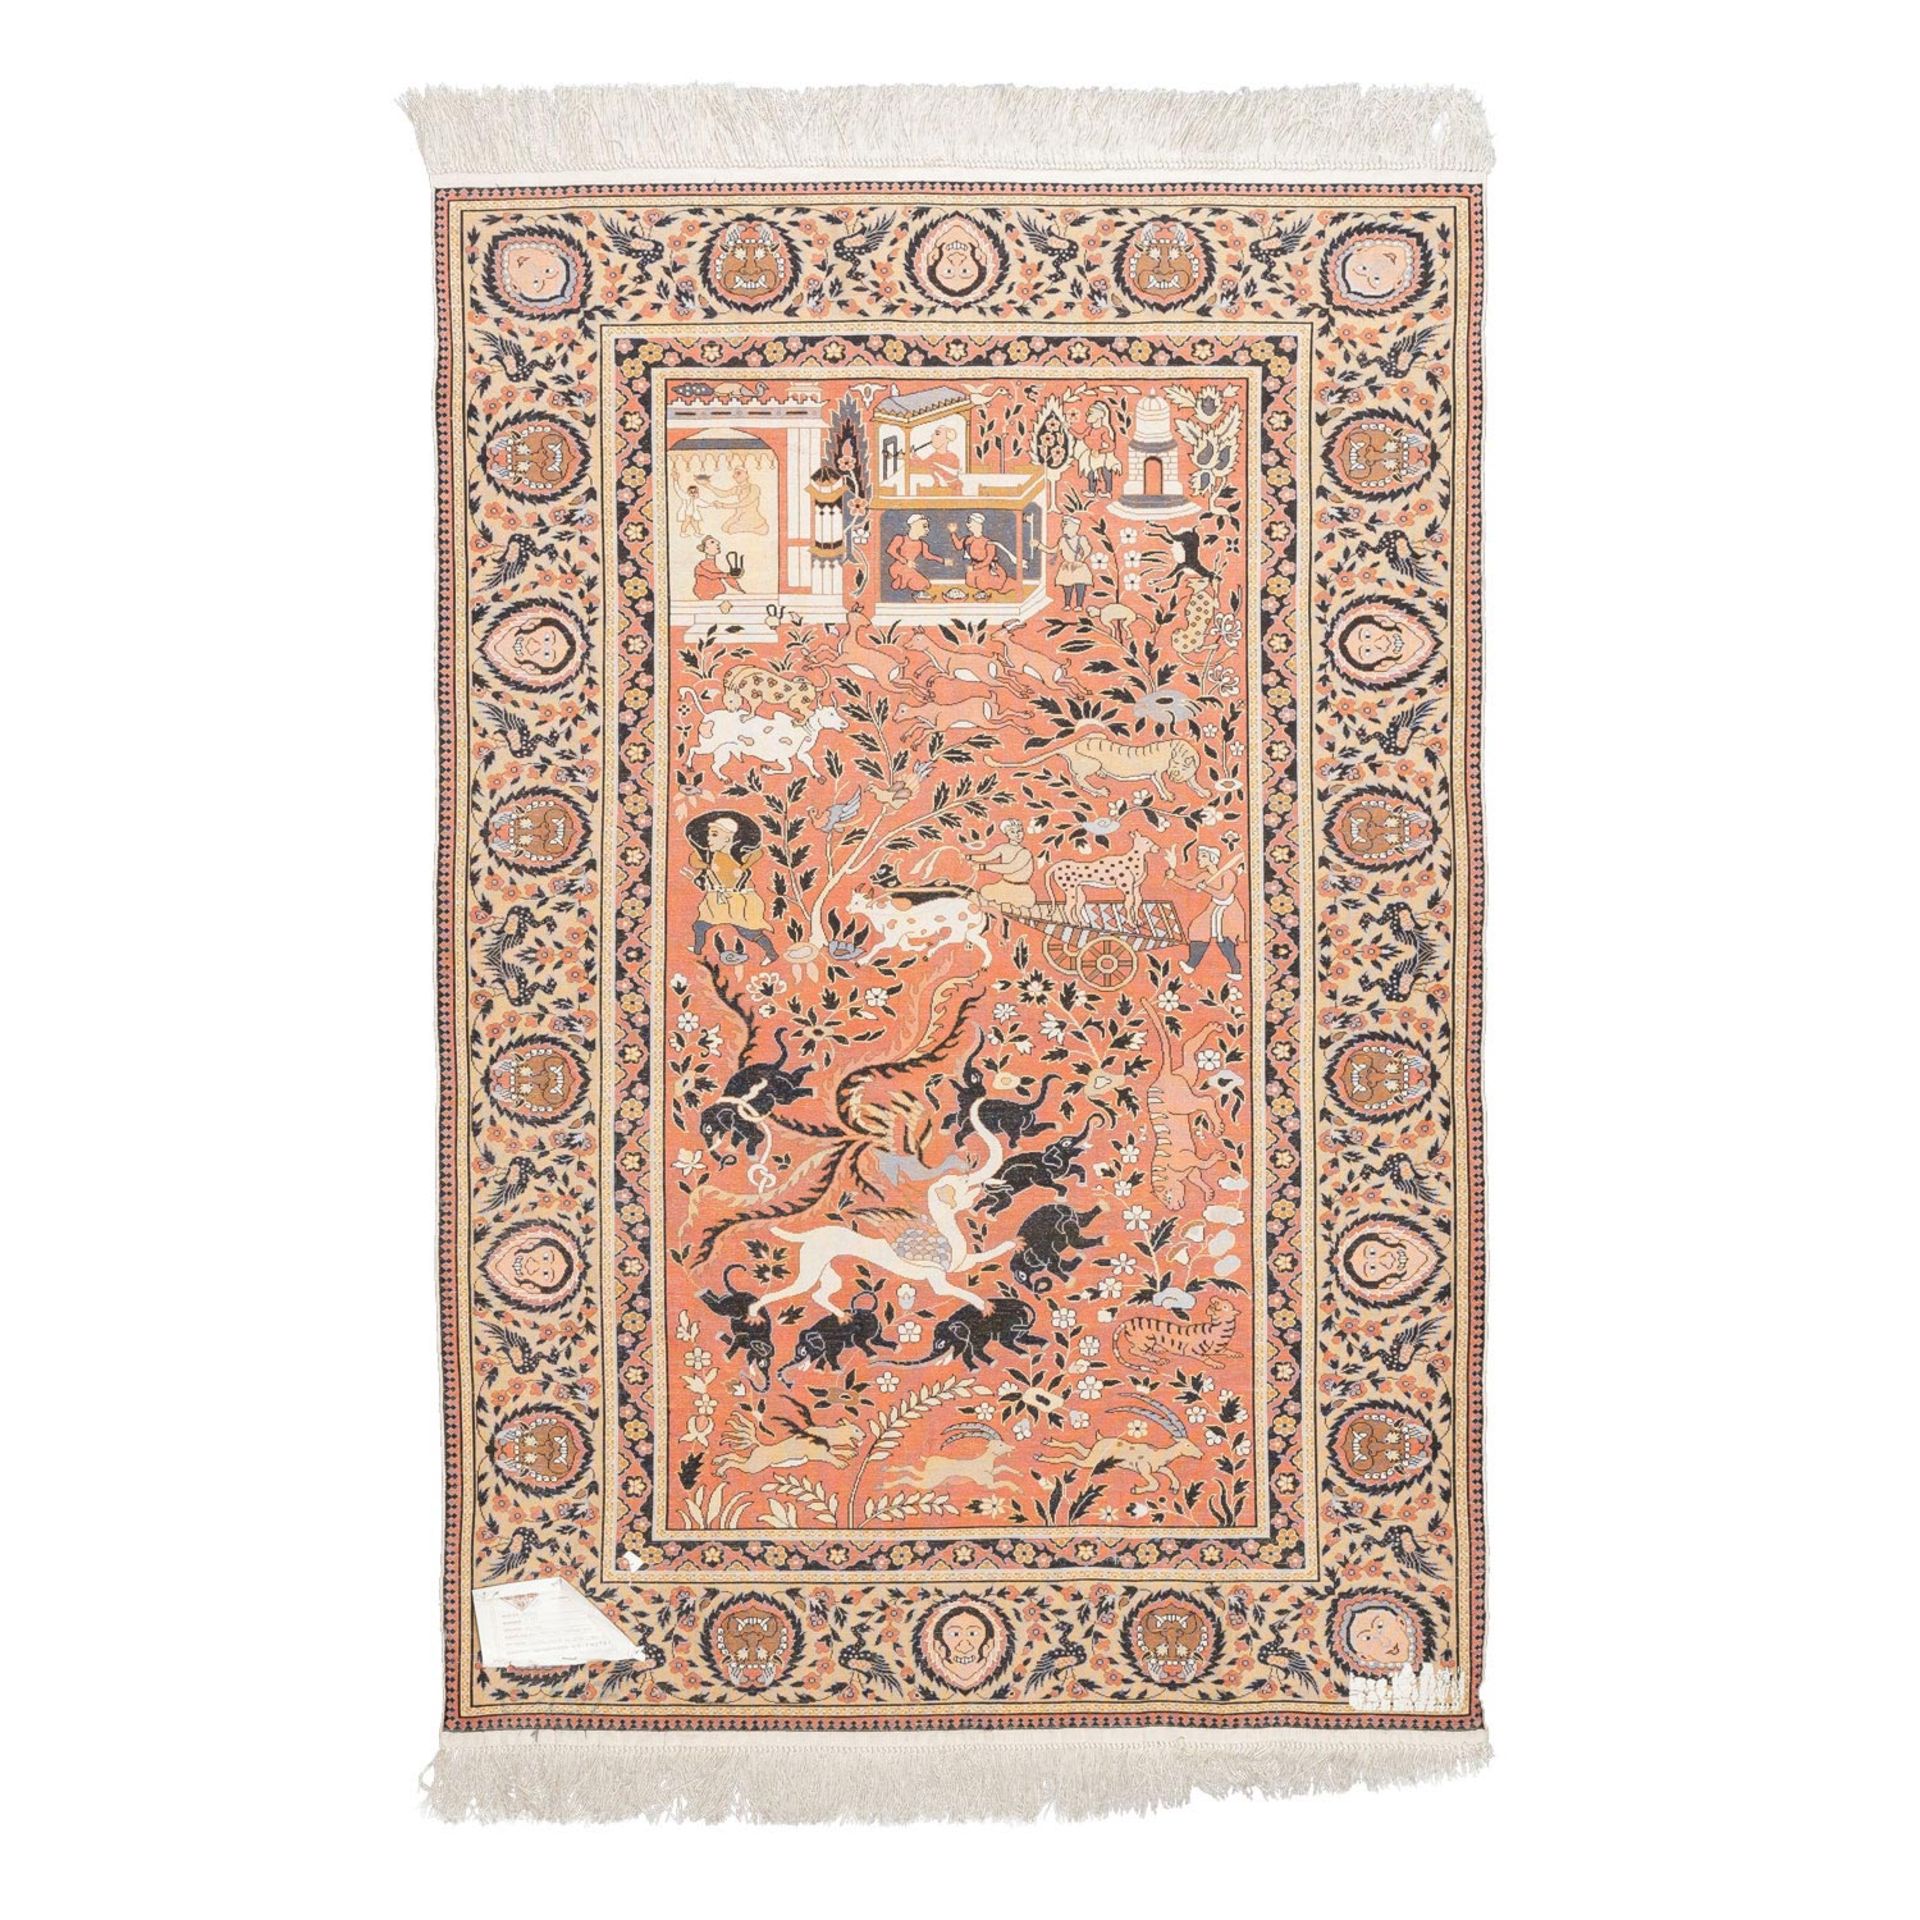 Orientteppich aus Seide. OST-TURKESTAN, 20. Jh., 152x91 cm. - Image 2 of 4